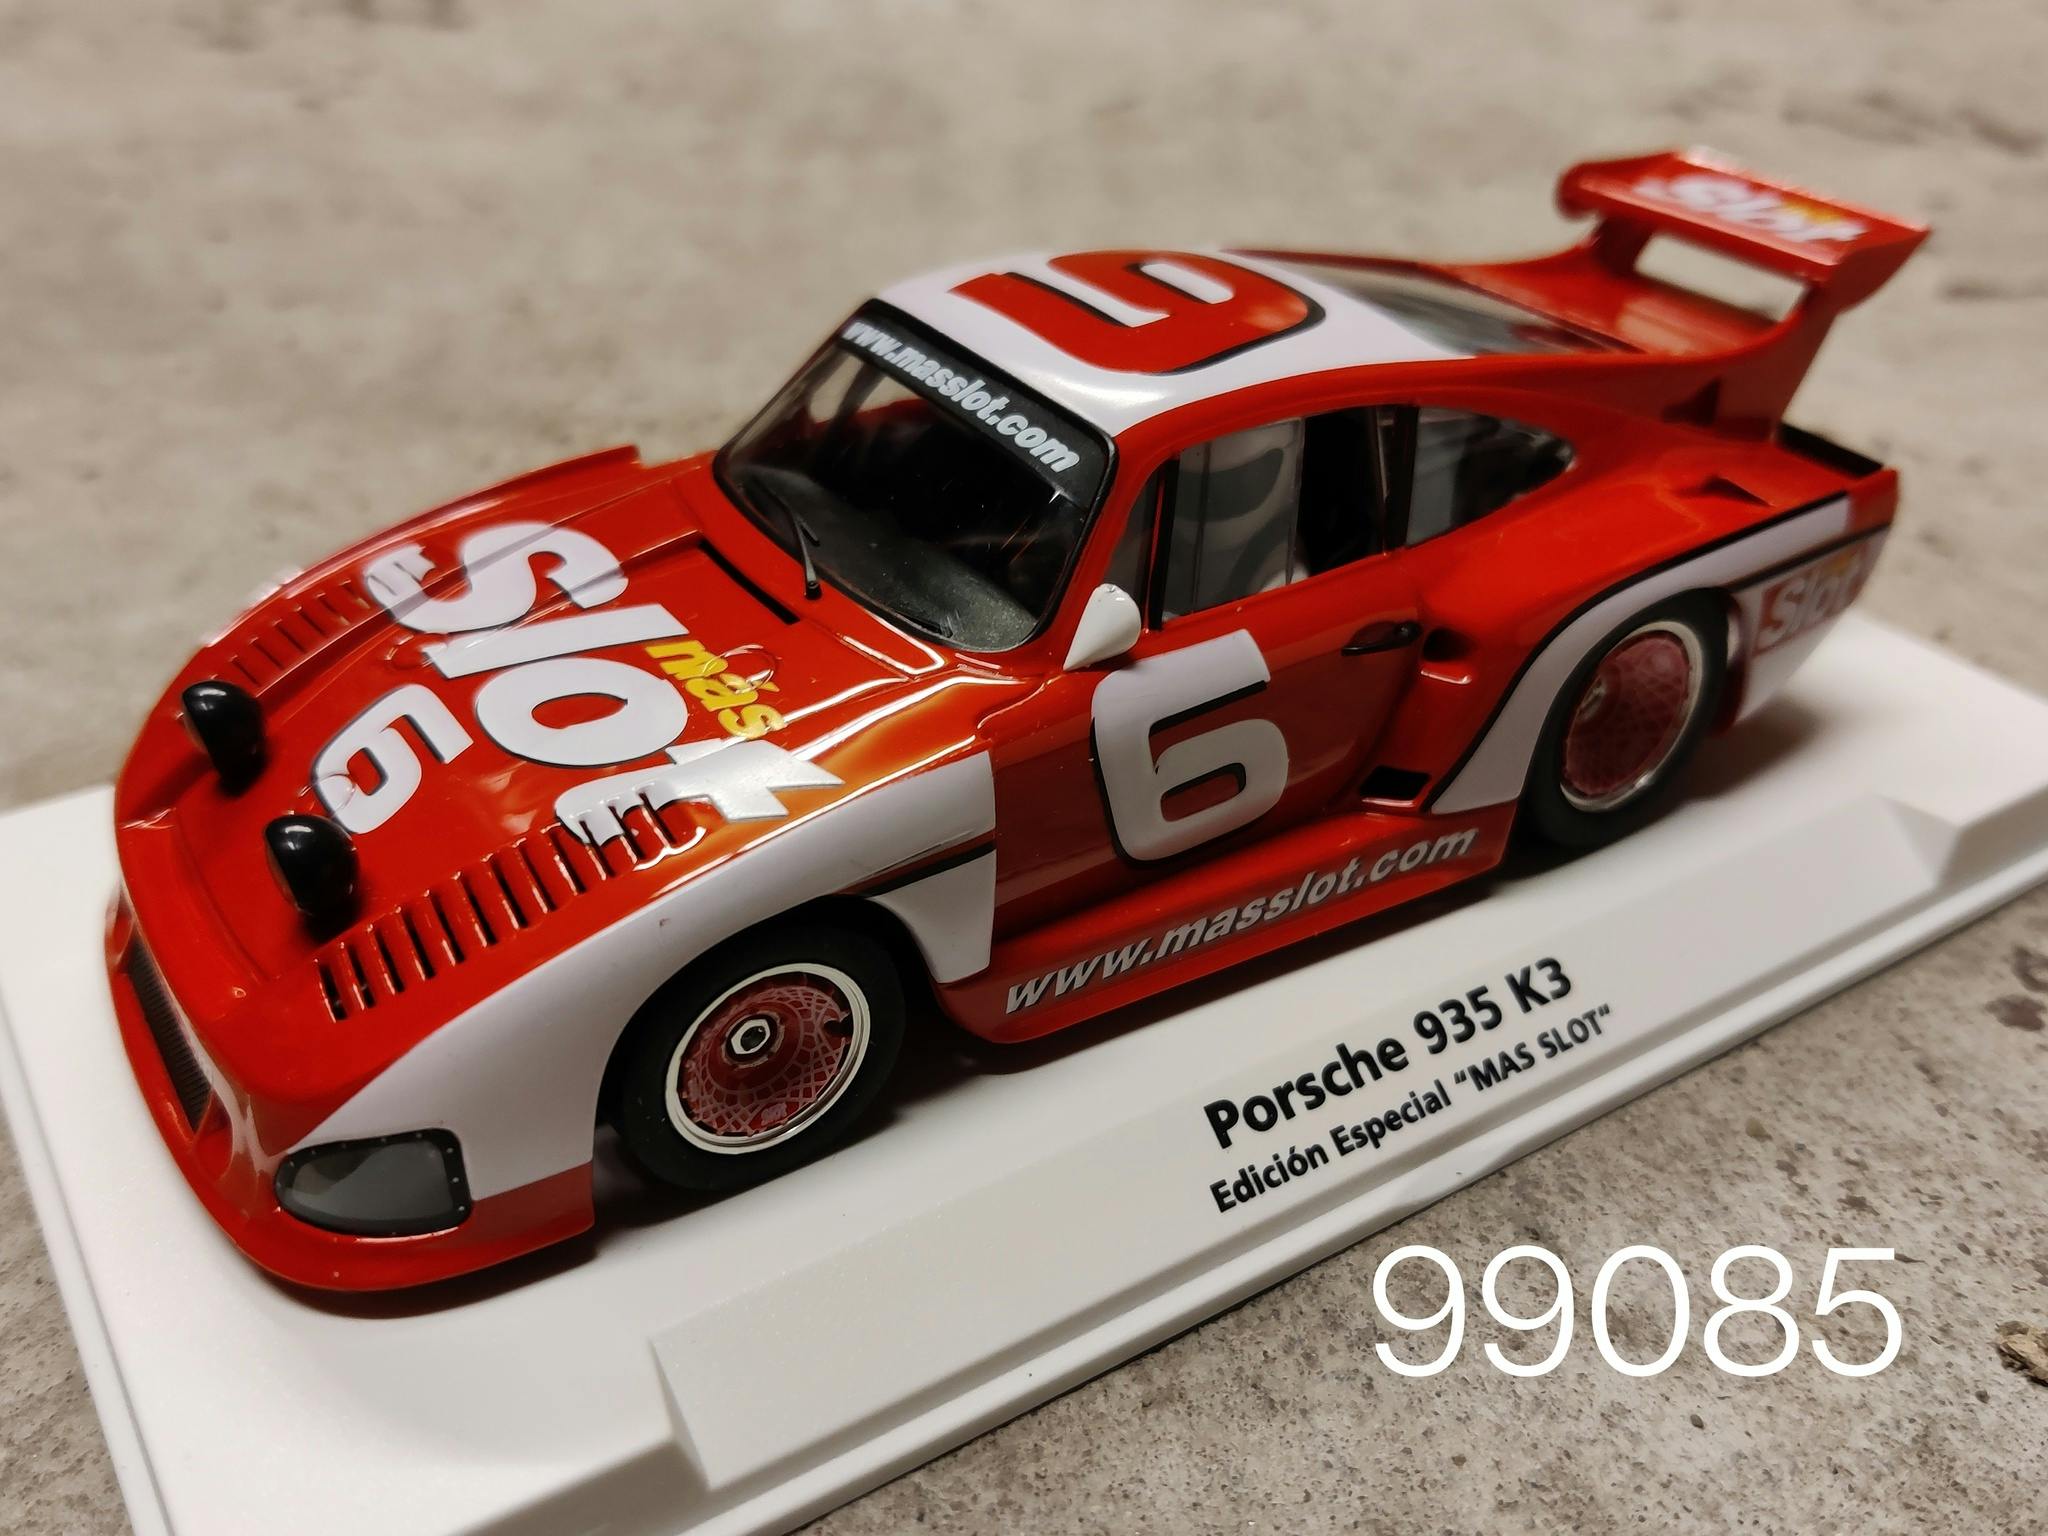 FLY Car Model - Porsche 935 K3 - Special Edition Magazine MAS SLOT (450 SEK) I LAGER / IN STOCK